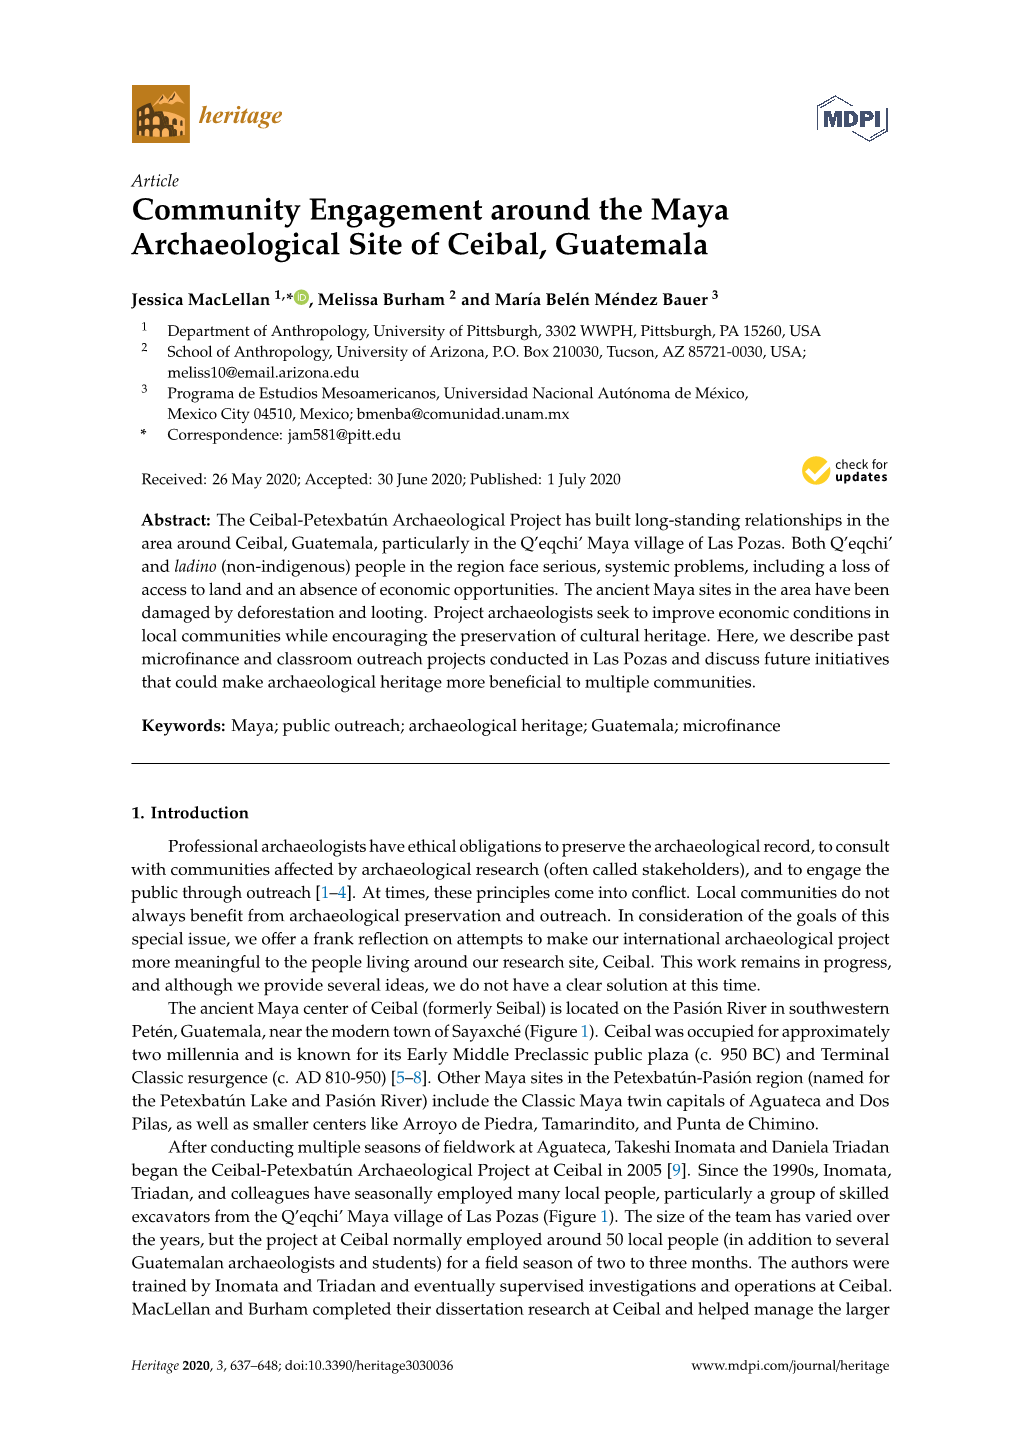 Community Engagement Around the Maya Archaeological Site of Ceibal, Guatemala